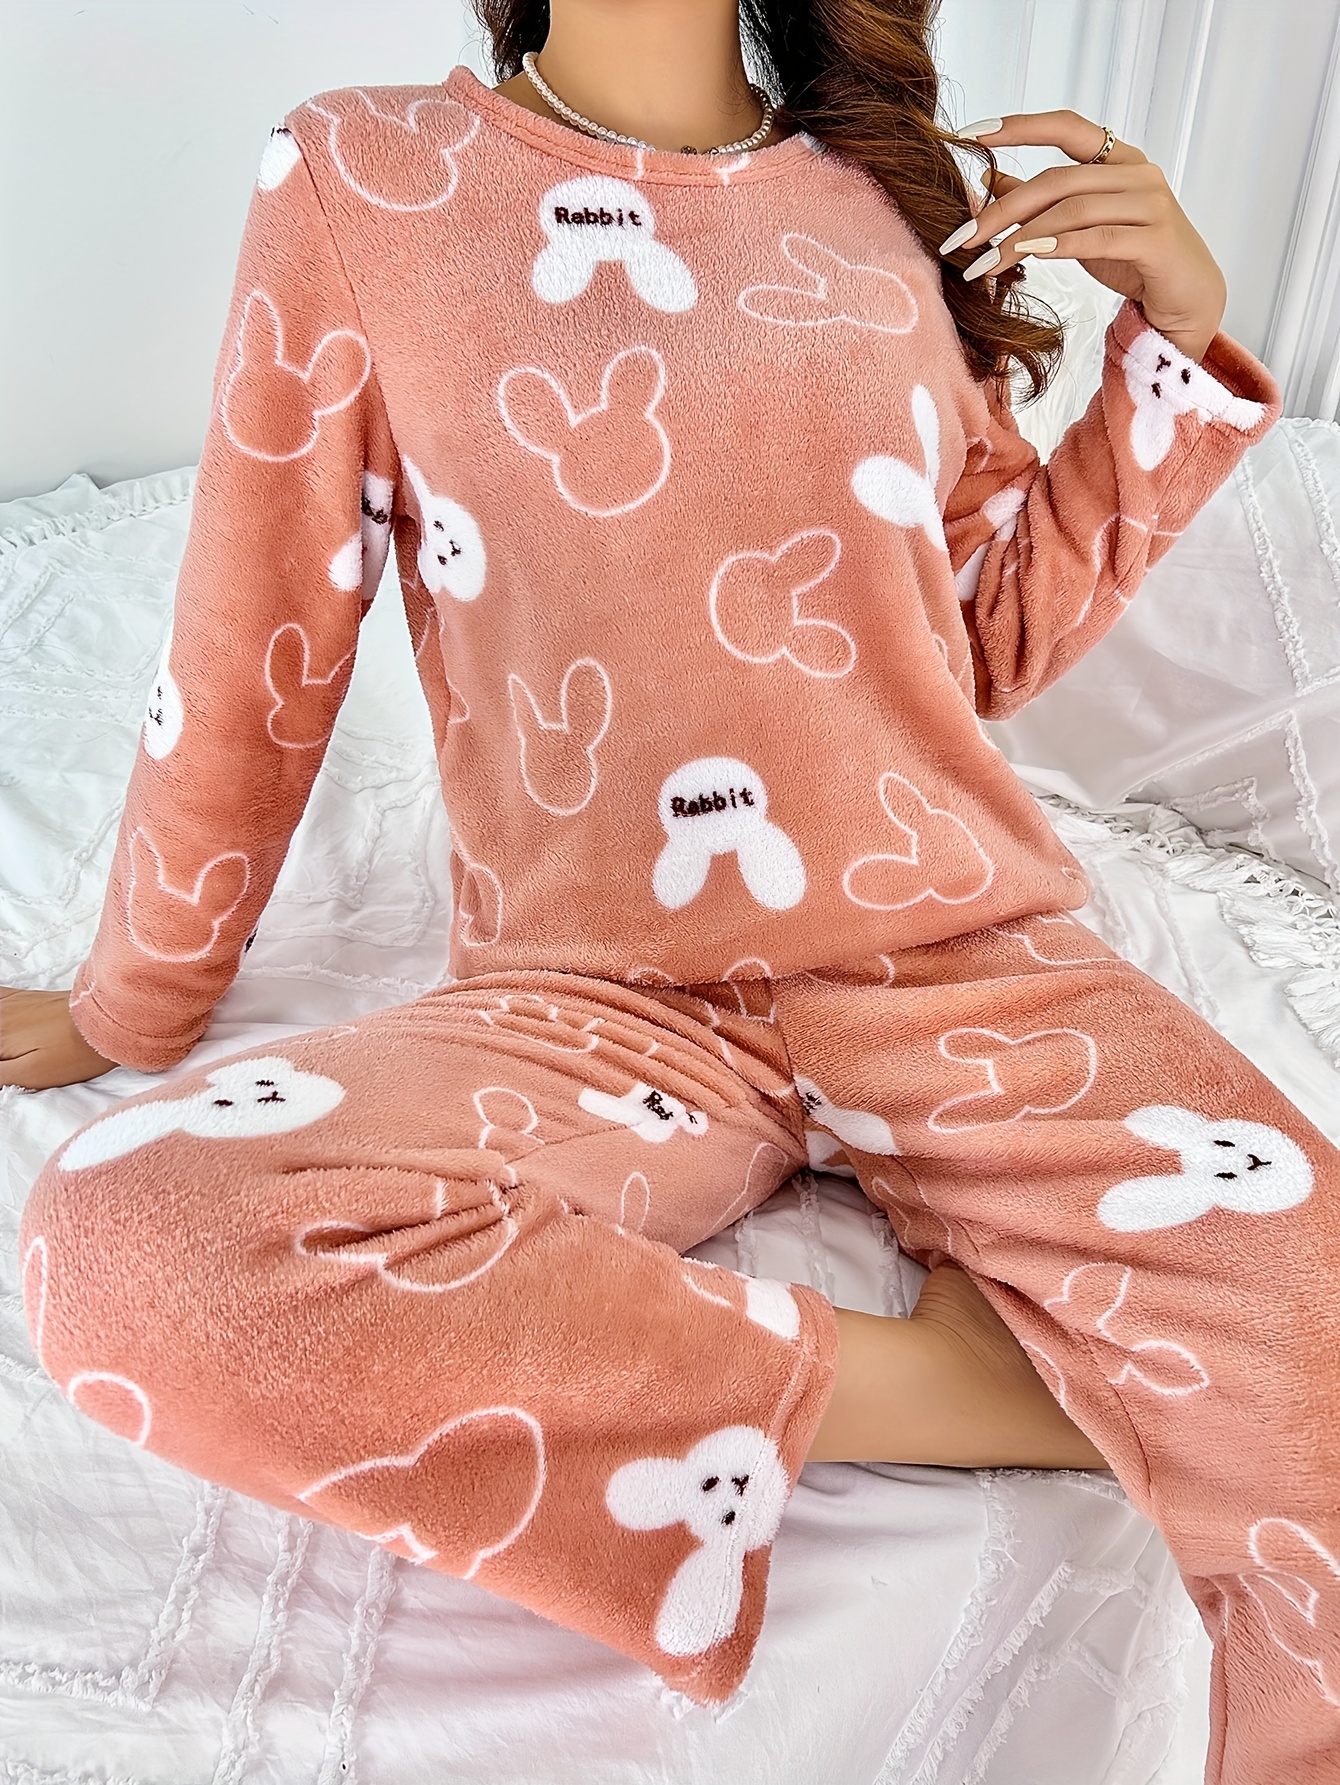 Heart Print Fuzzy Pajama Set For Music Festival, Long Sleeve Crew Neck Top  & Elastic Waistband Pants, Women's Sleepwear & Loungewear